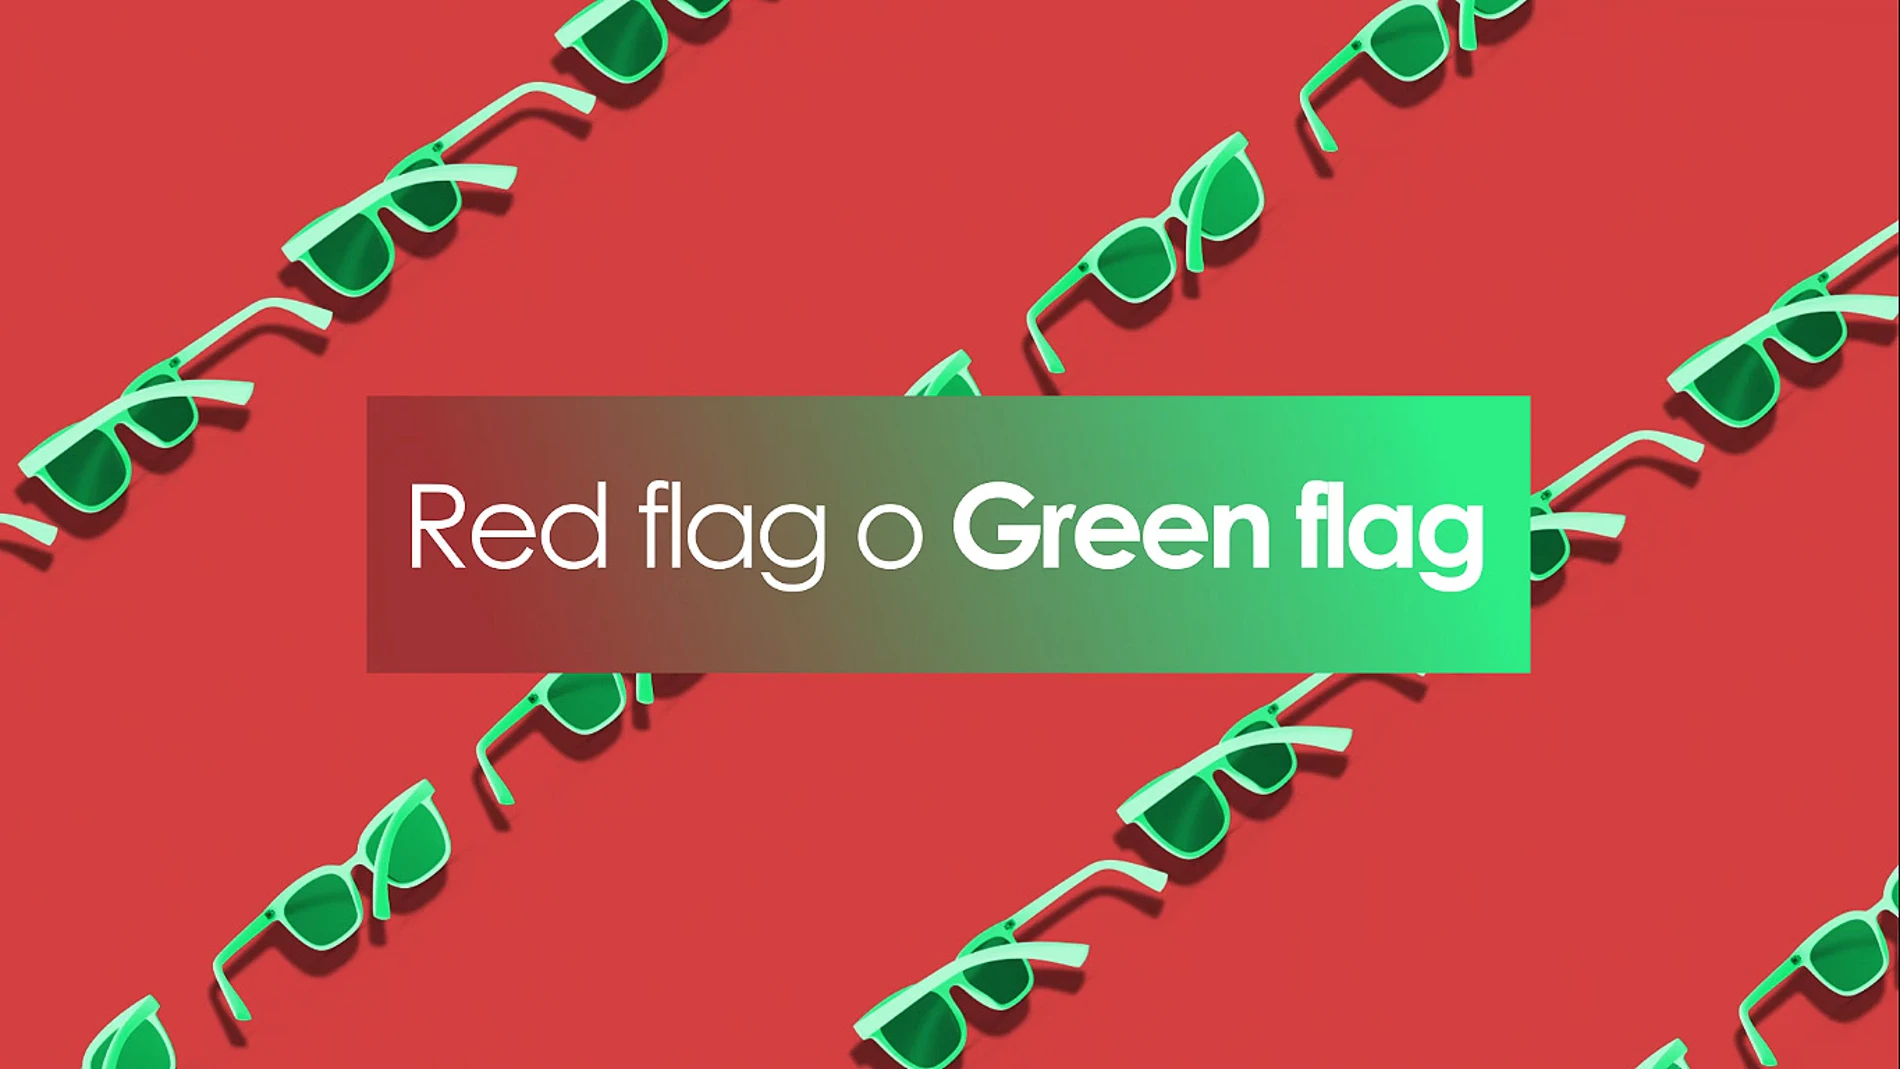 Green flag o red flag